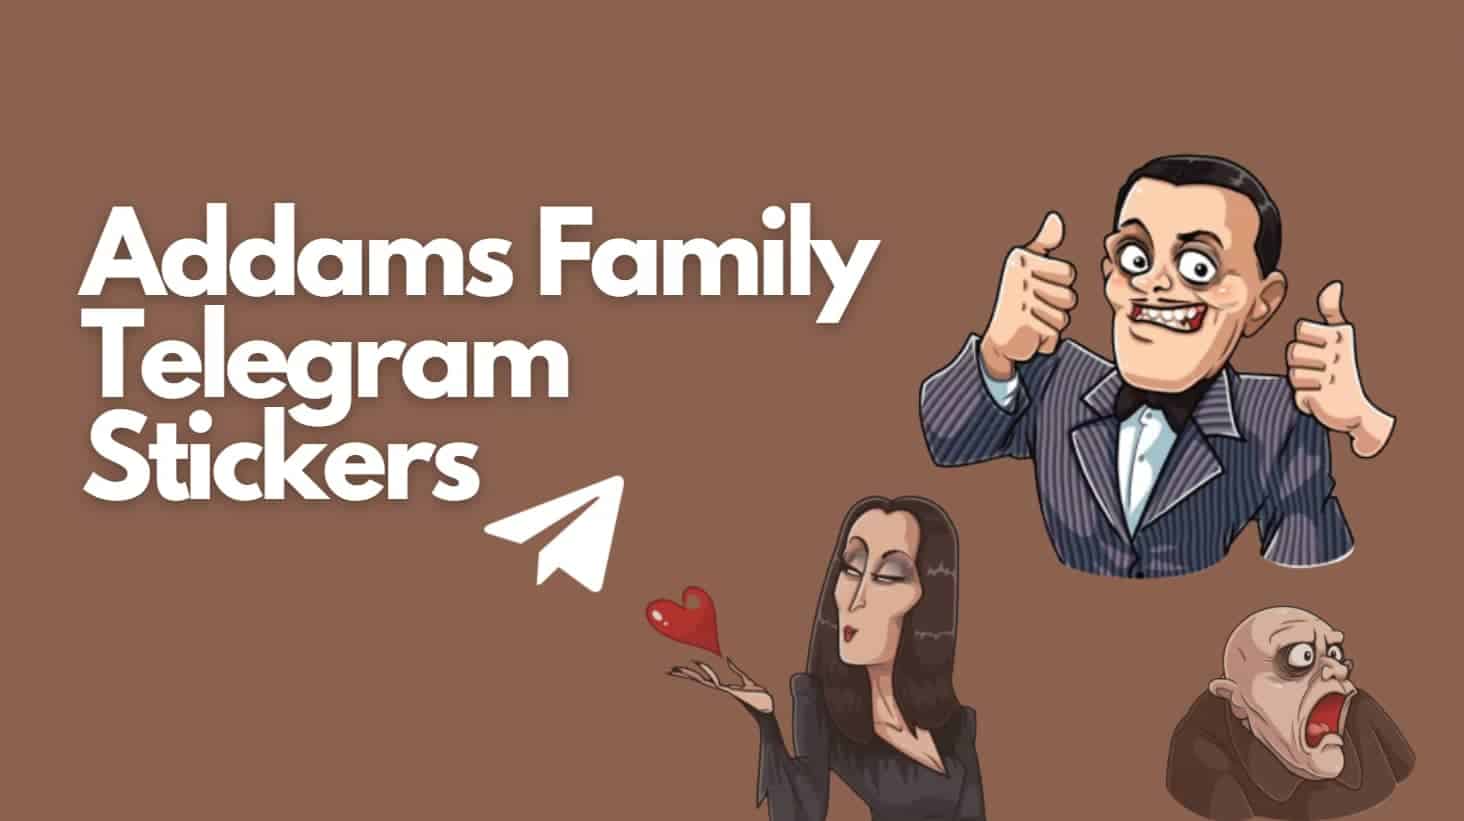 The Addams Family Telegram Stickers